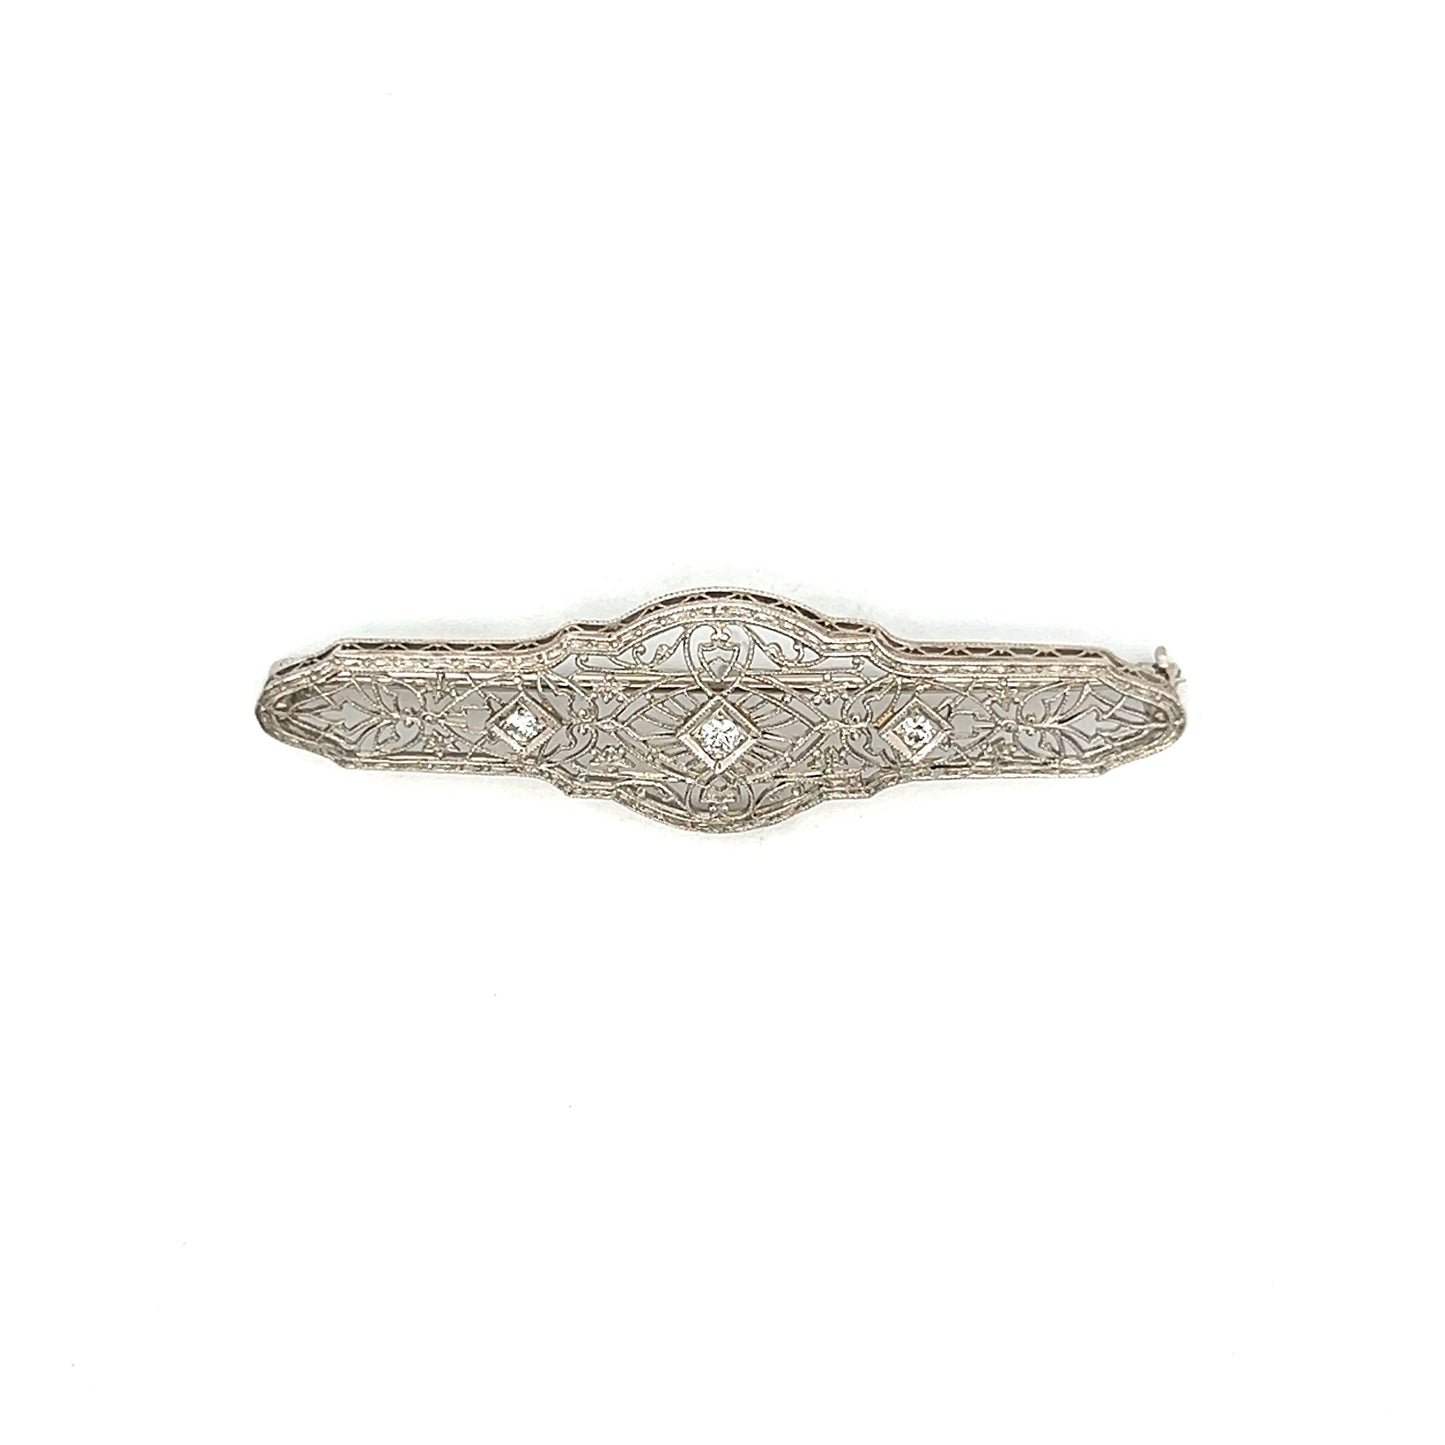 .08 Vintage Diamond Filigree Brooch in 14k White Gold